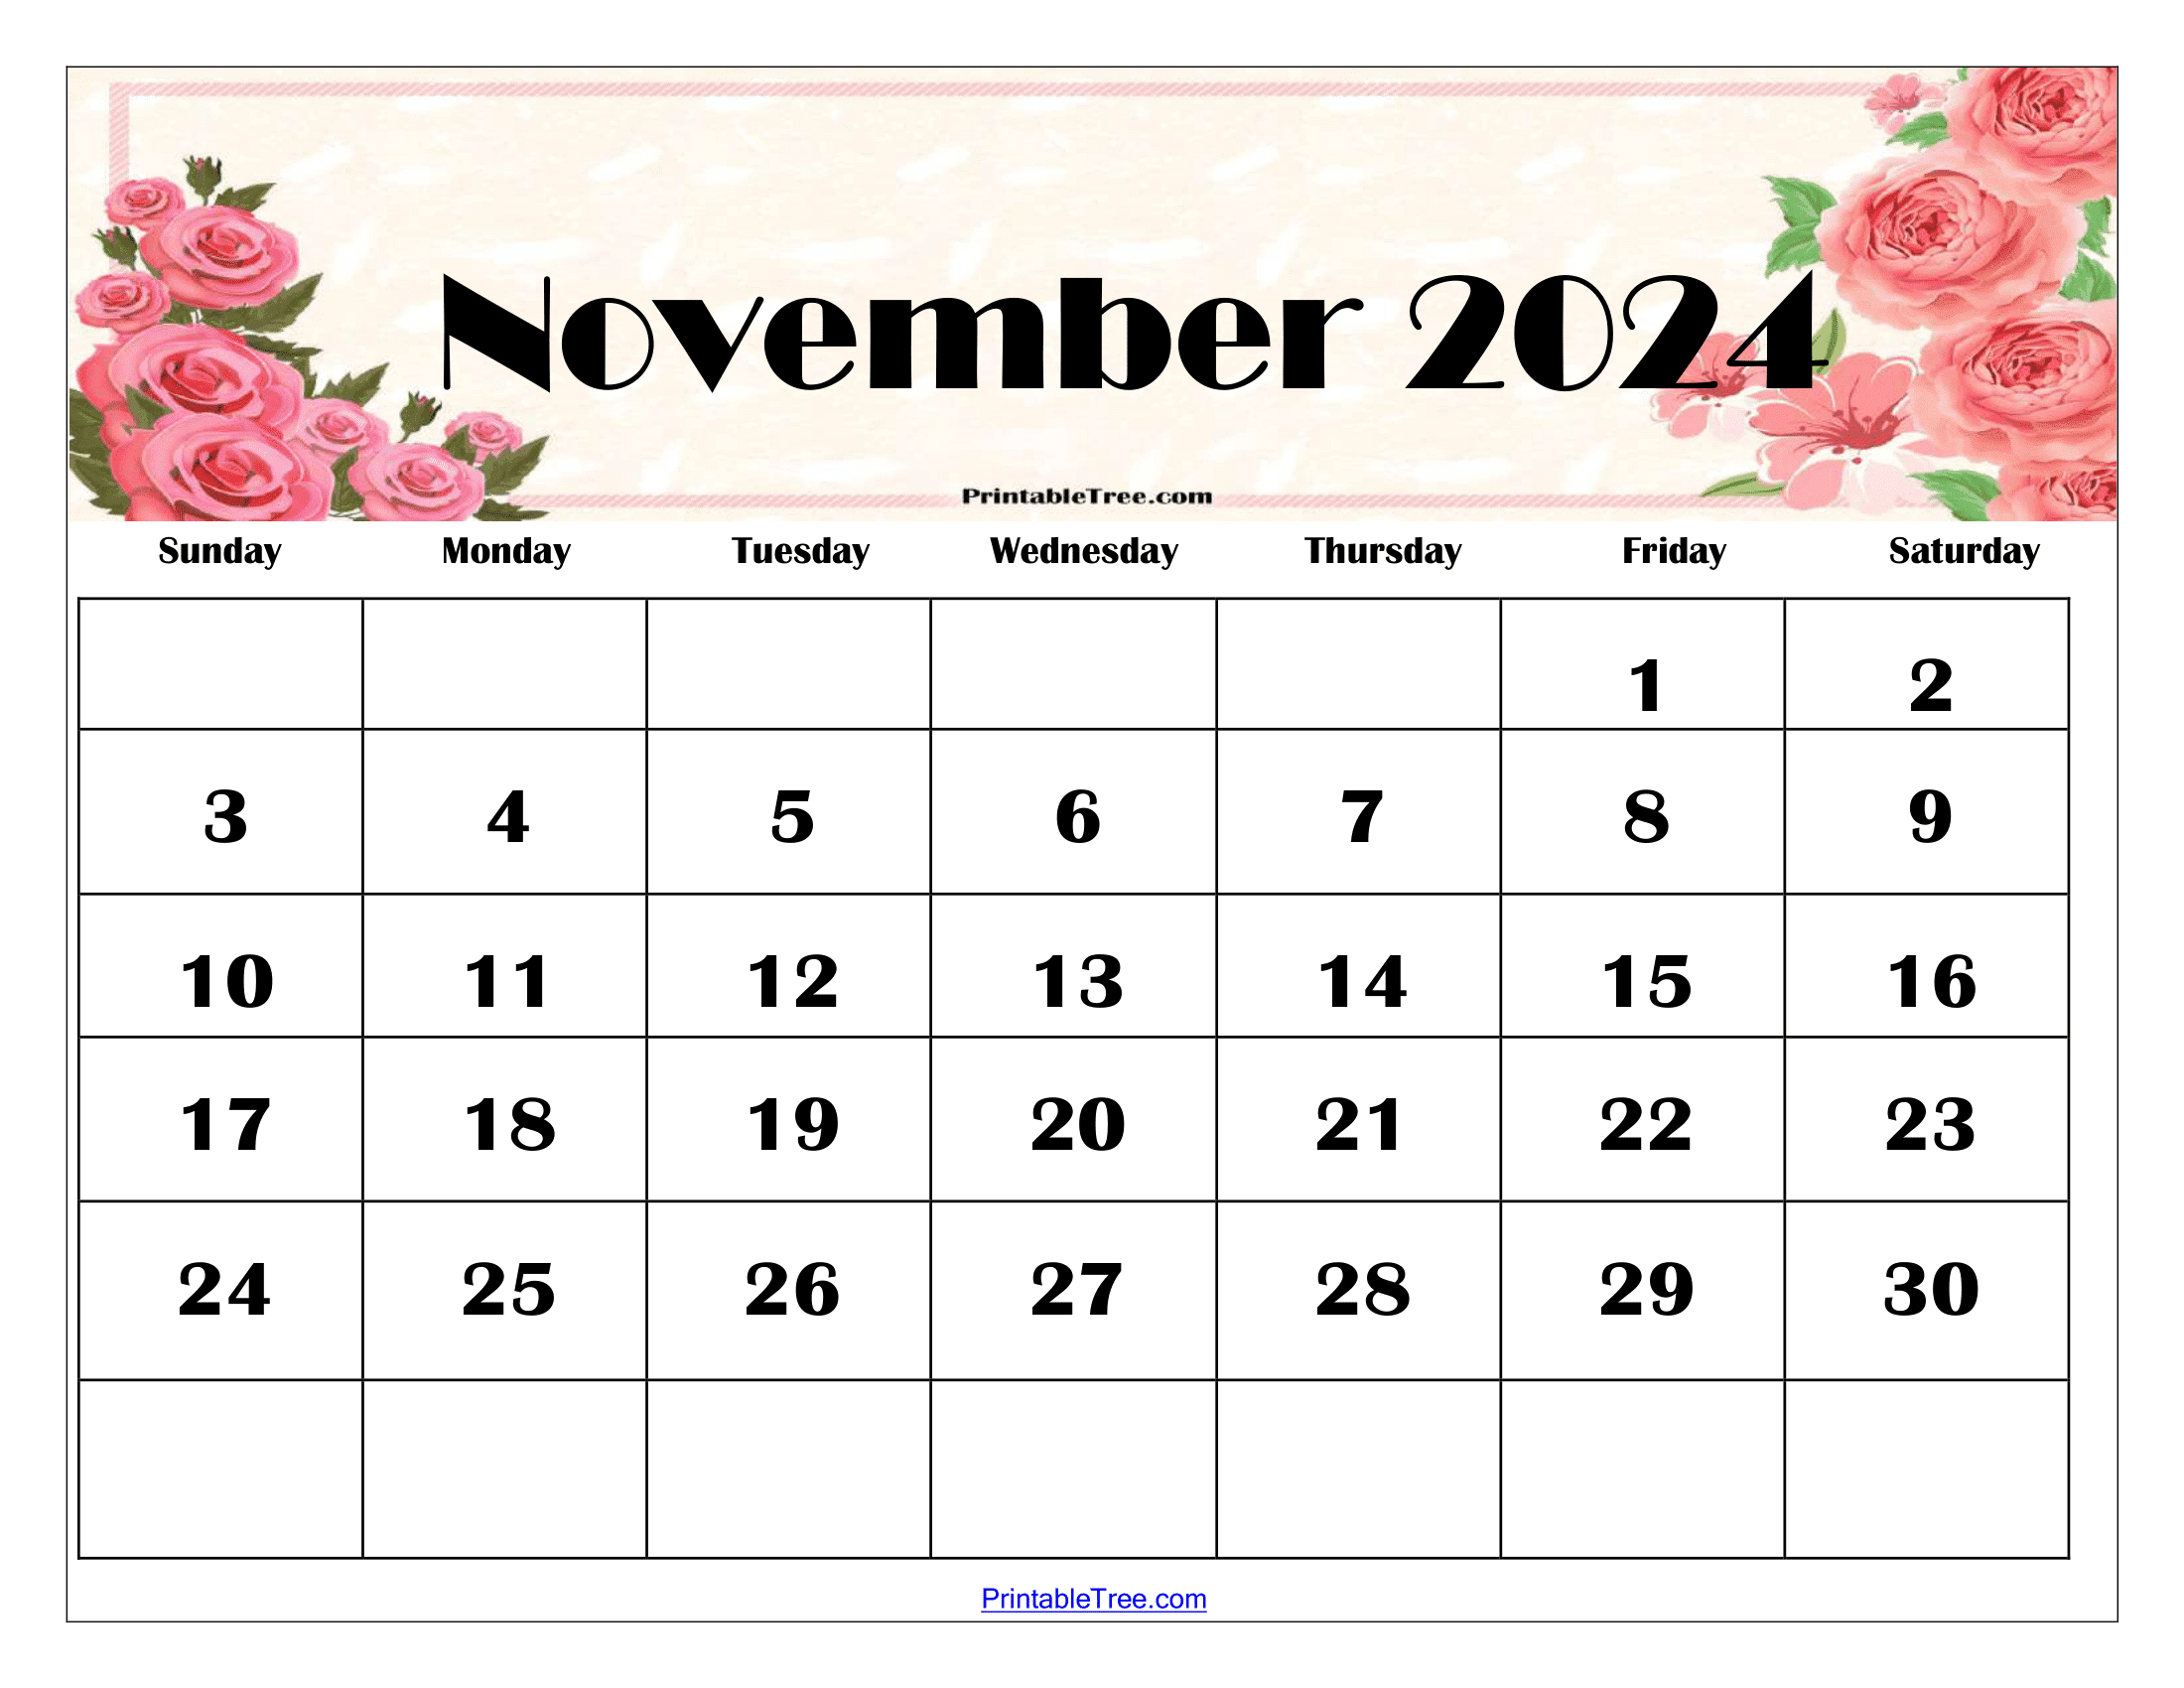 November 2024 Calendar Printable Pdf Template With Holidays within Free Printable Blank Calendar November 2024